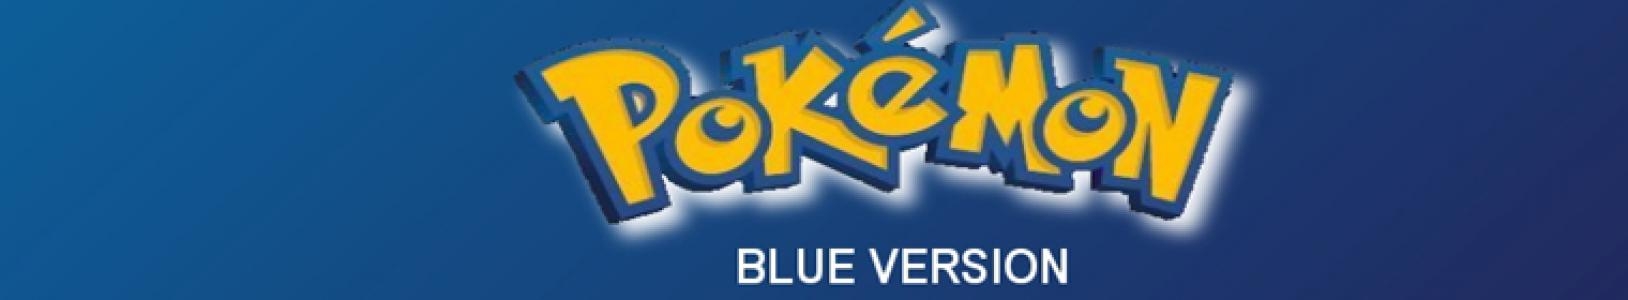 Pokémon Blue Version banner